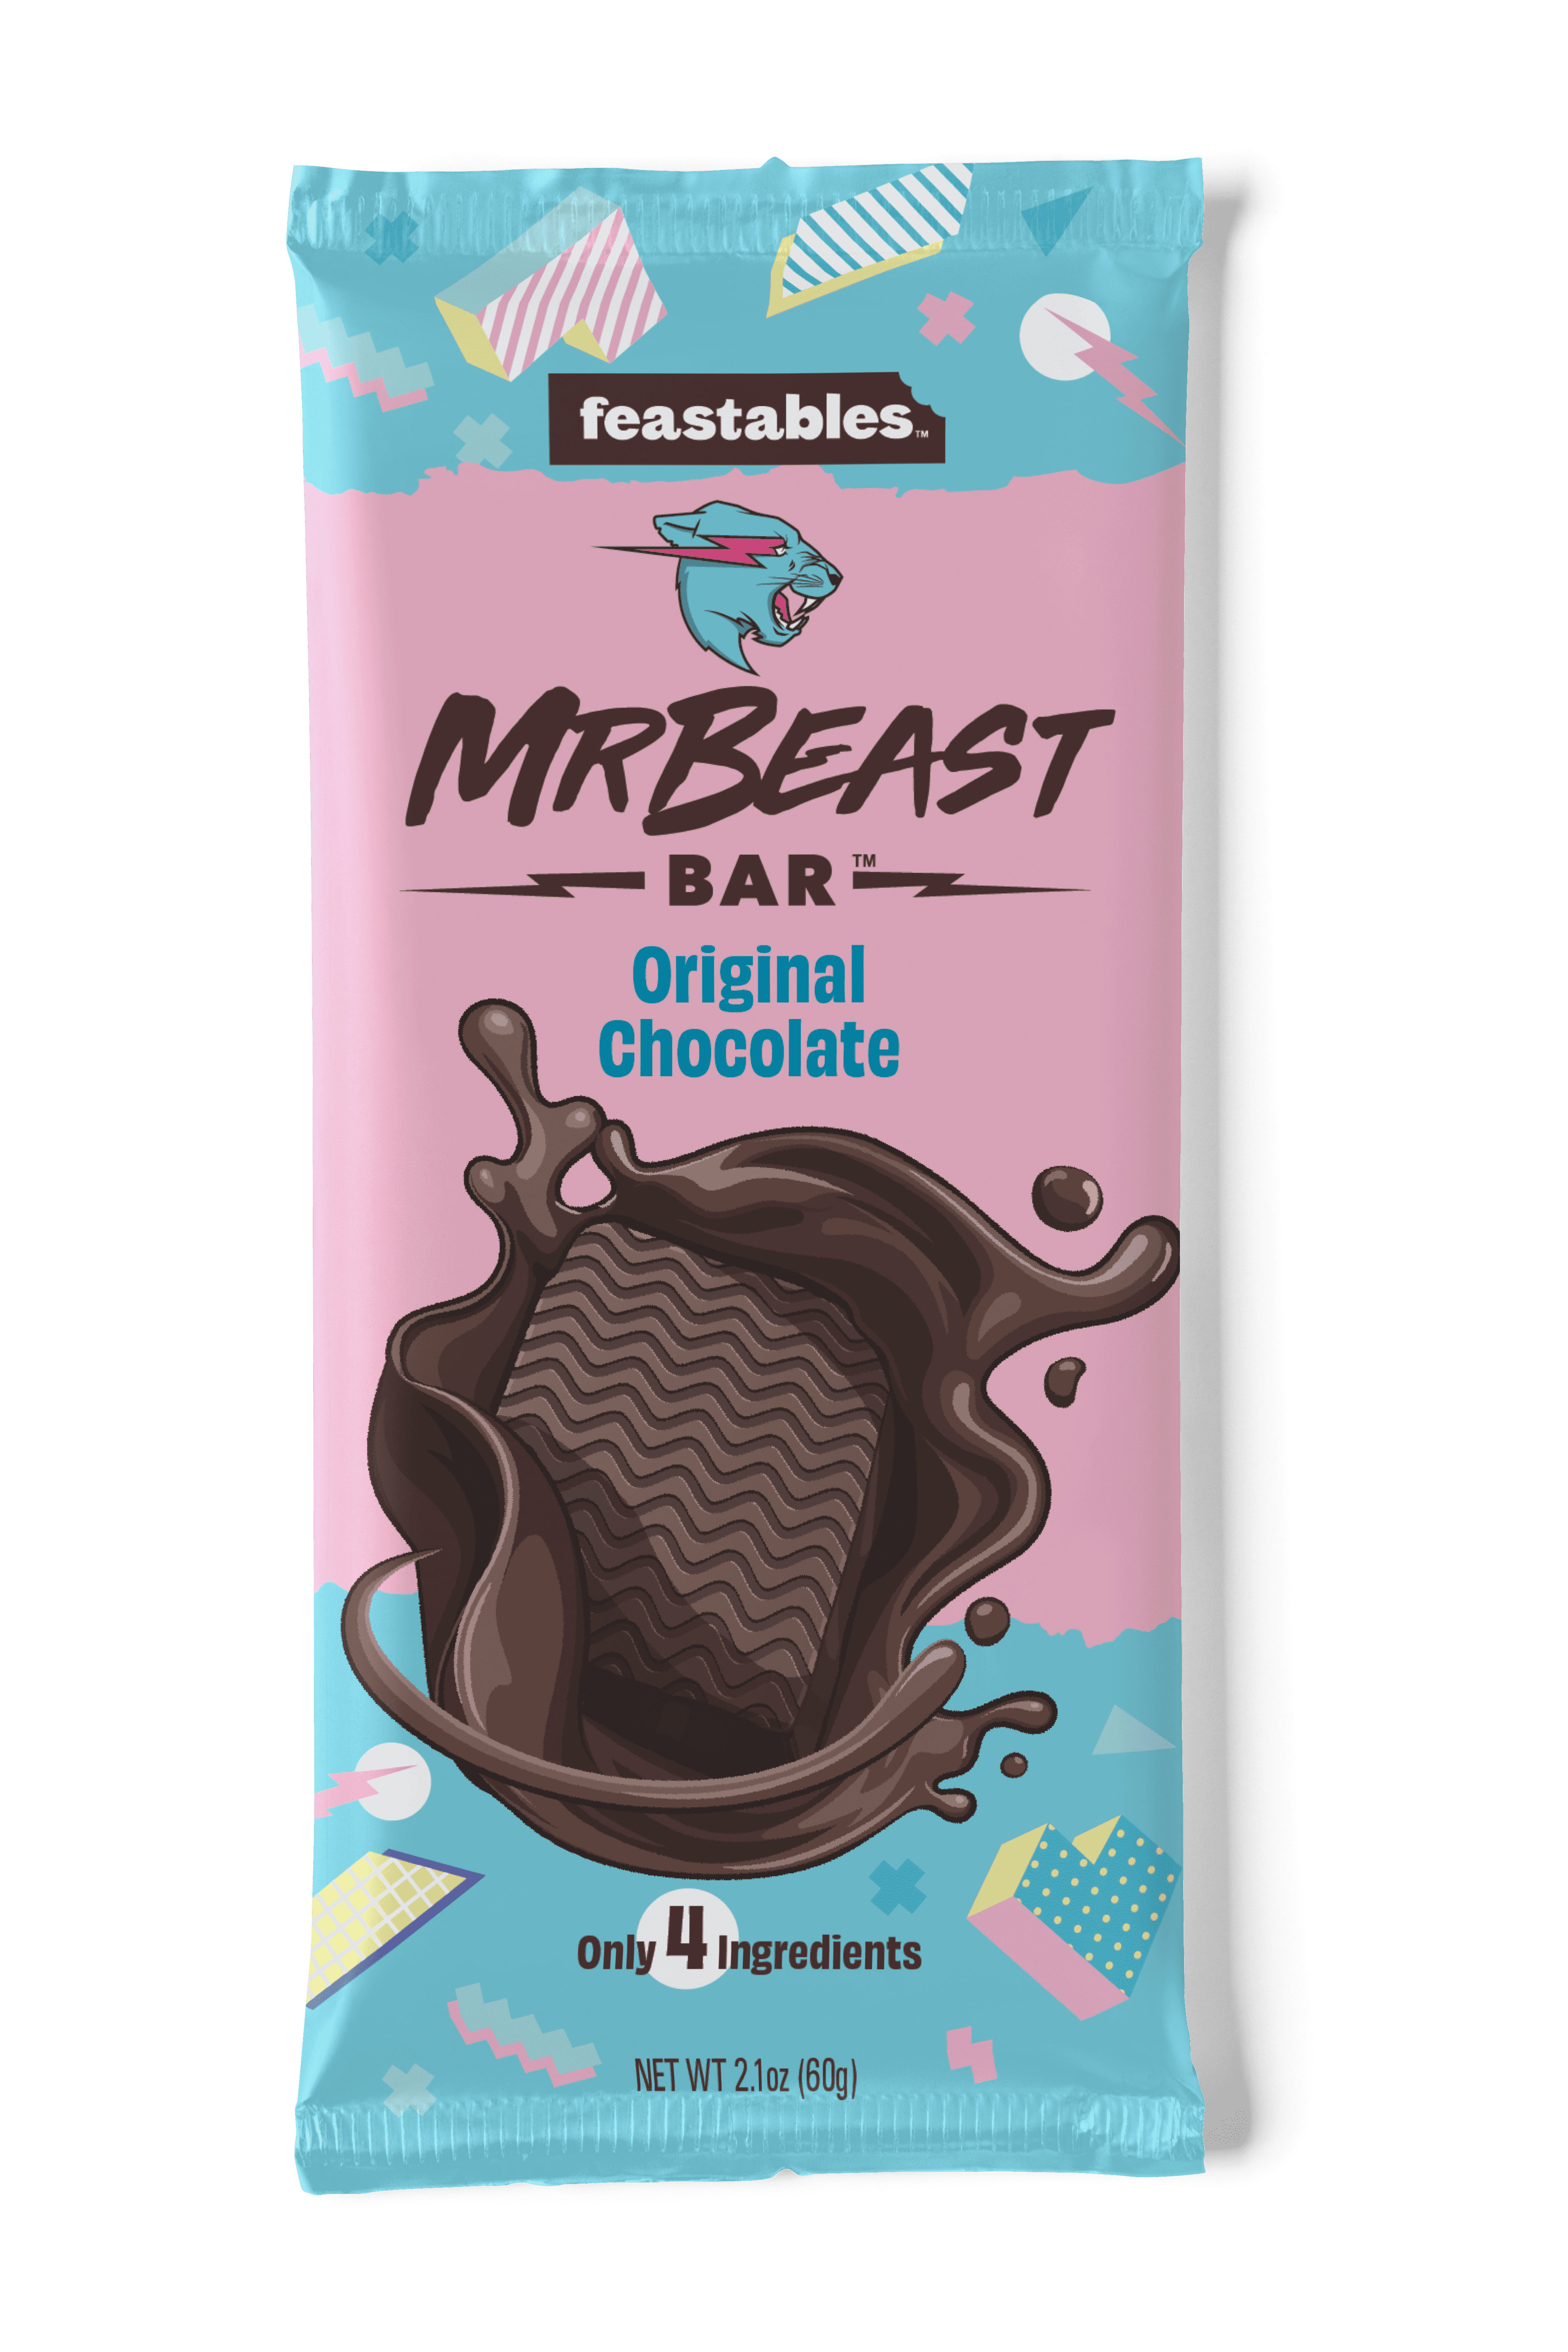 Feastables MrBeast Original Chocolate Bar, 2.1 oz (60g), 1 bar ...